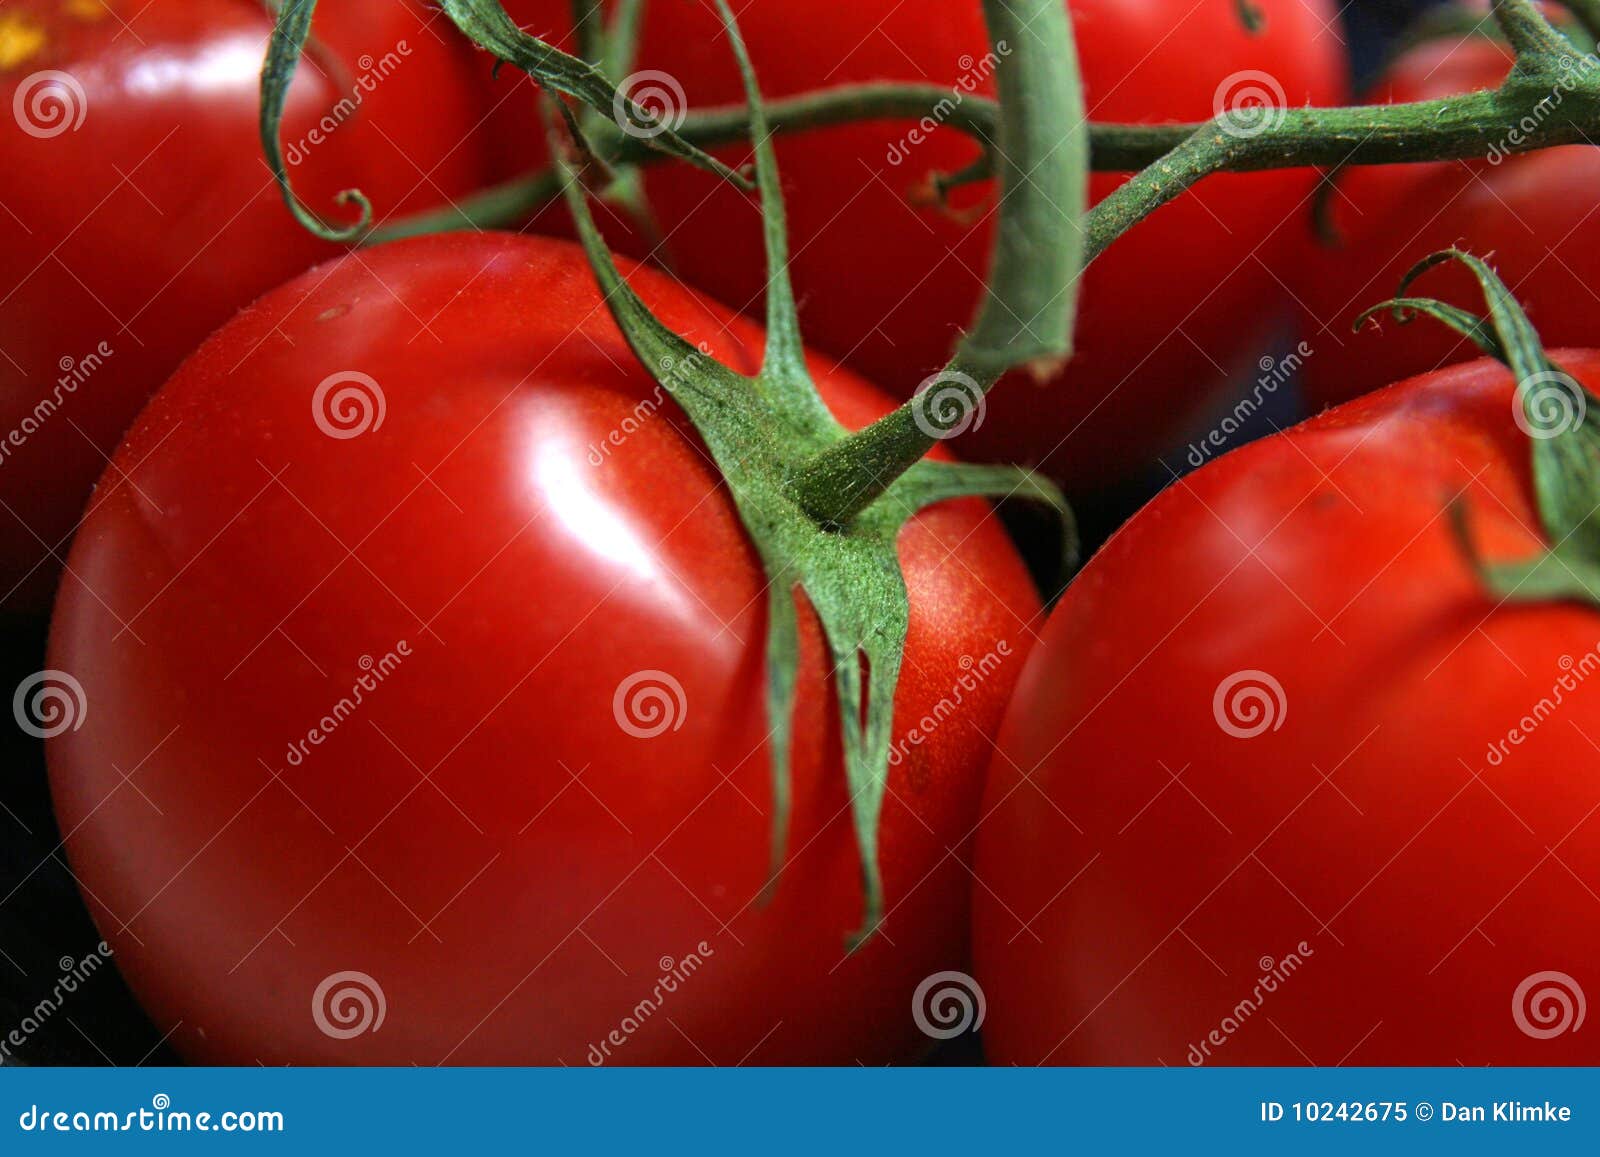 ripe red tomatos